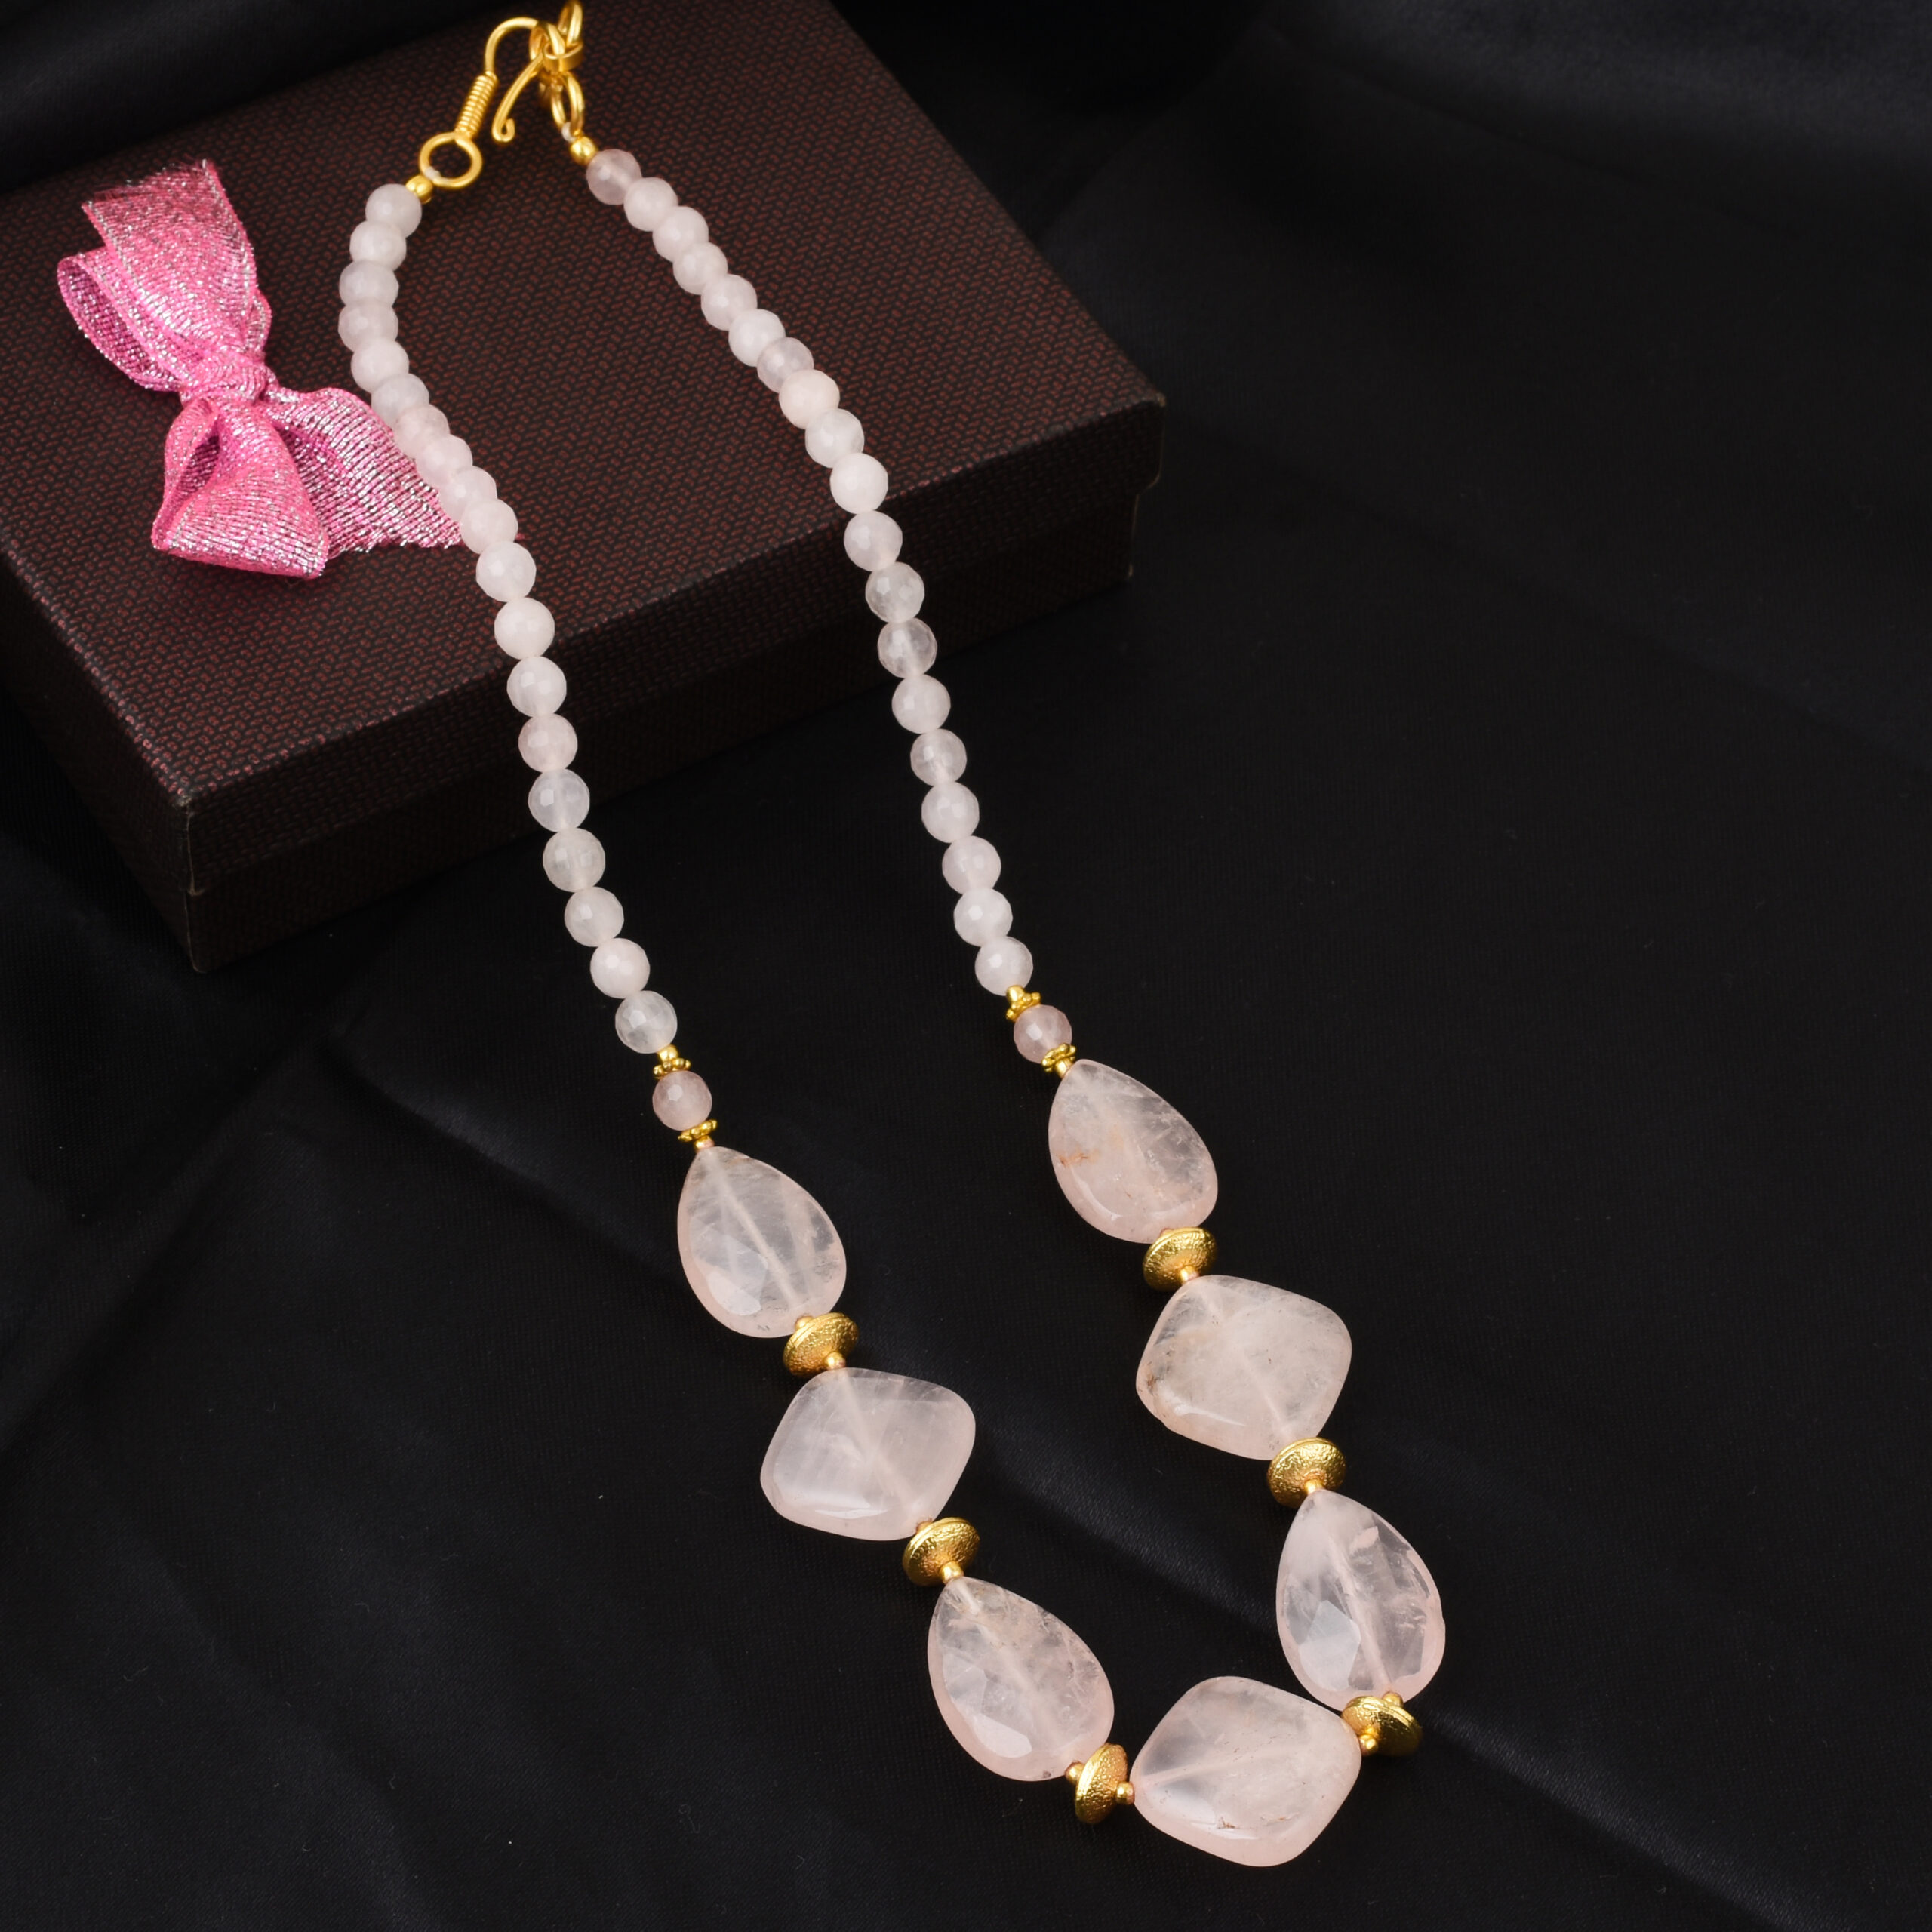 Buy AV FASHION INDIA - Antique Sky Blue Colour Onyx Gemstone Beads Necklace  for Girl and Women 3 Layer Fashion Ethnic Strand Blue Mala Bridal Kantha  Fashion Jewellery (AV_T22) at Amazon.in